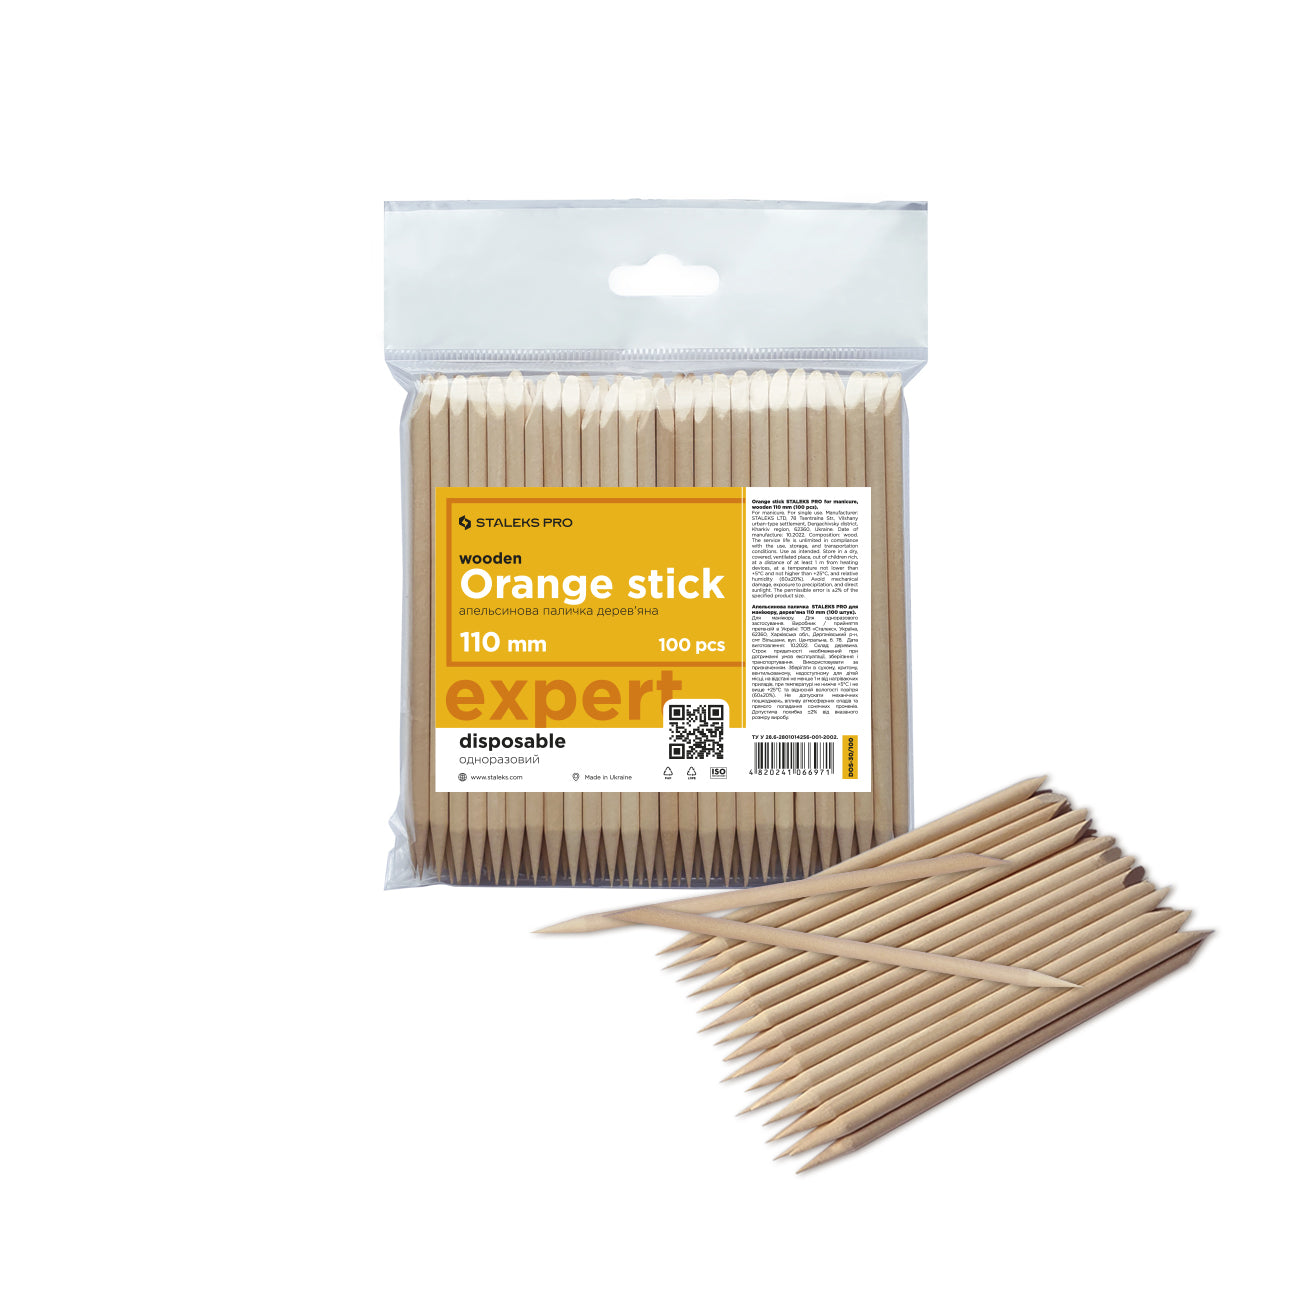 Staleks Orange stick STALEKS PRO for manicure, wooden 110 mm (100 pcs)